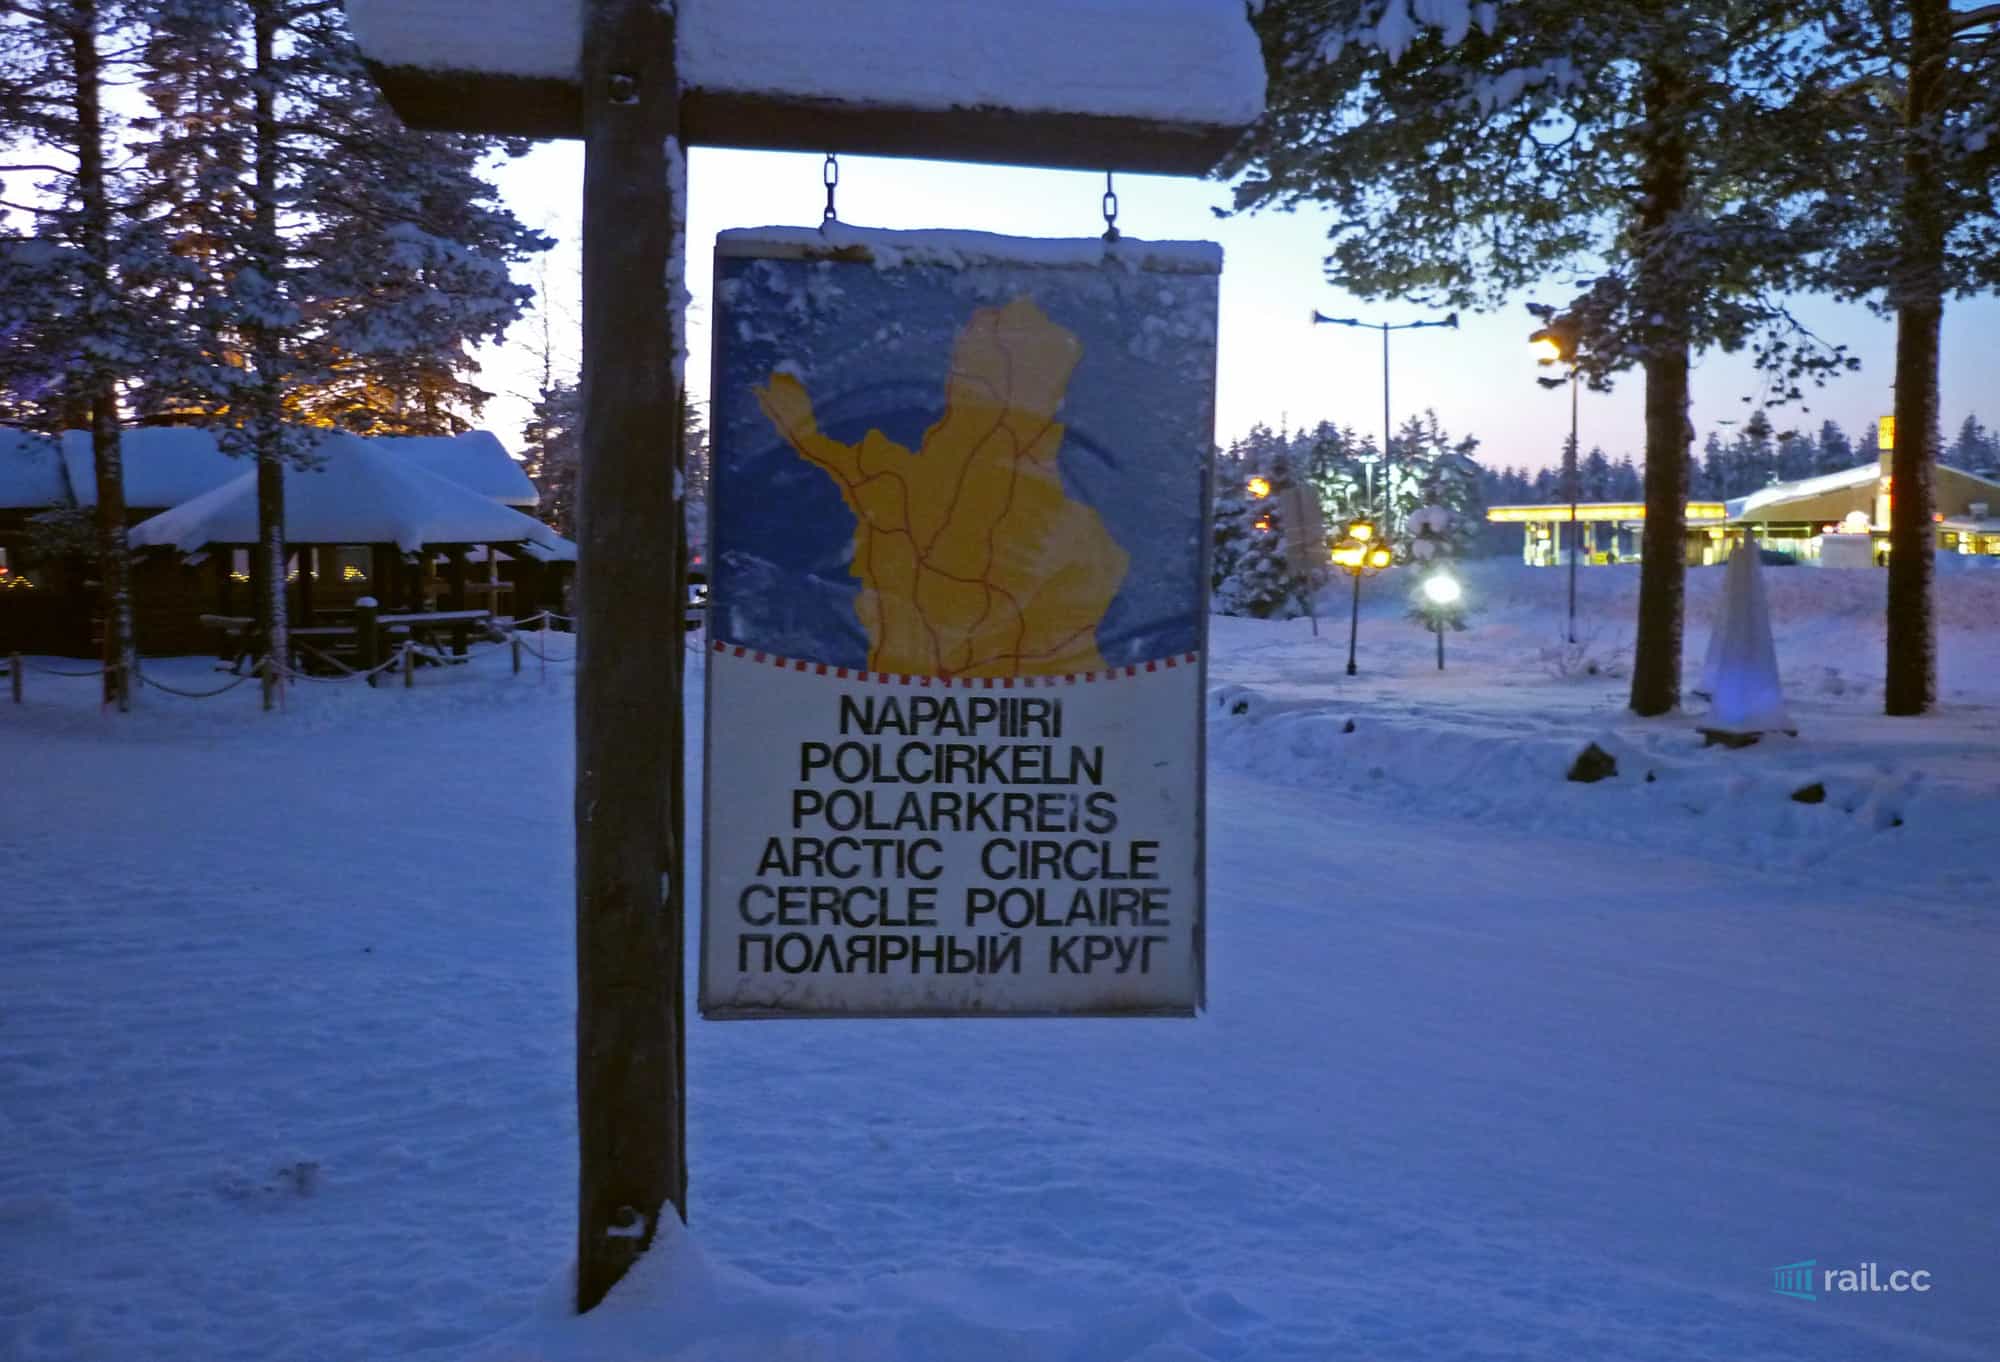 Polarkreis in Rovaniemi